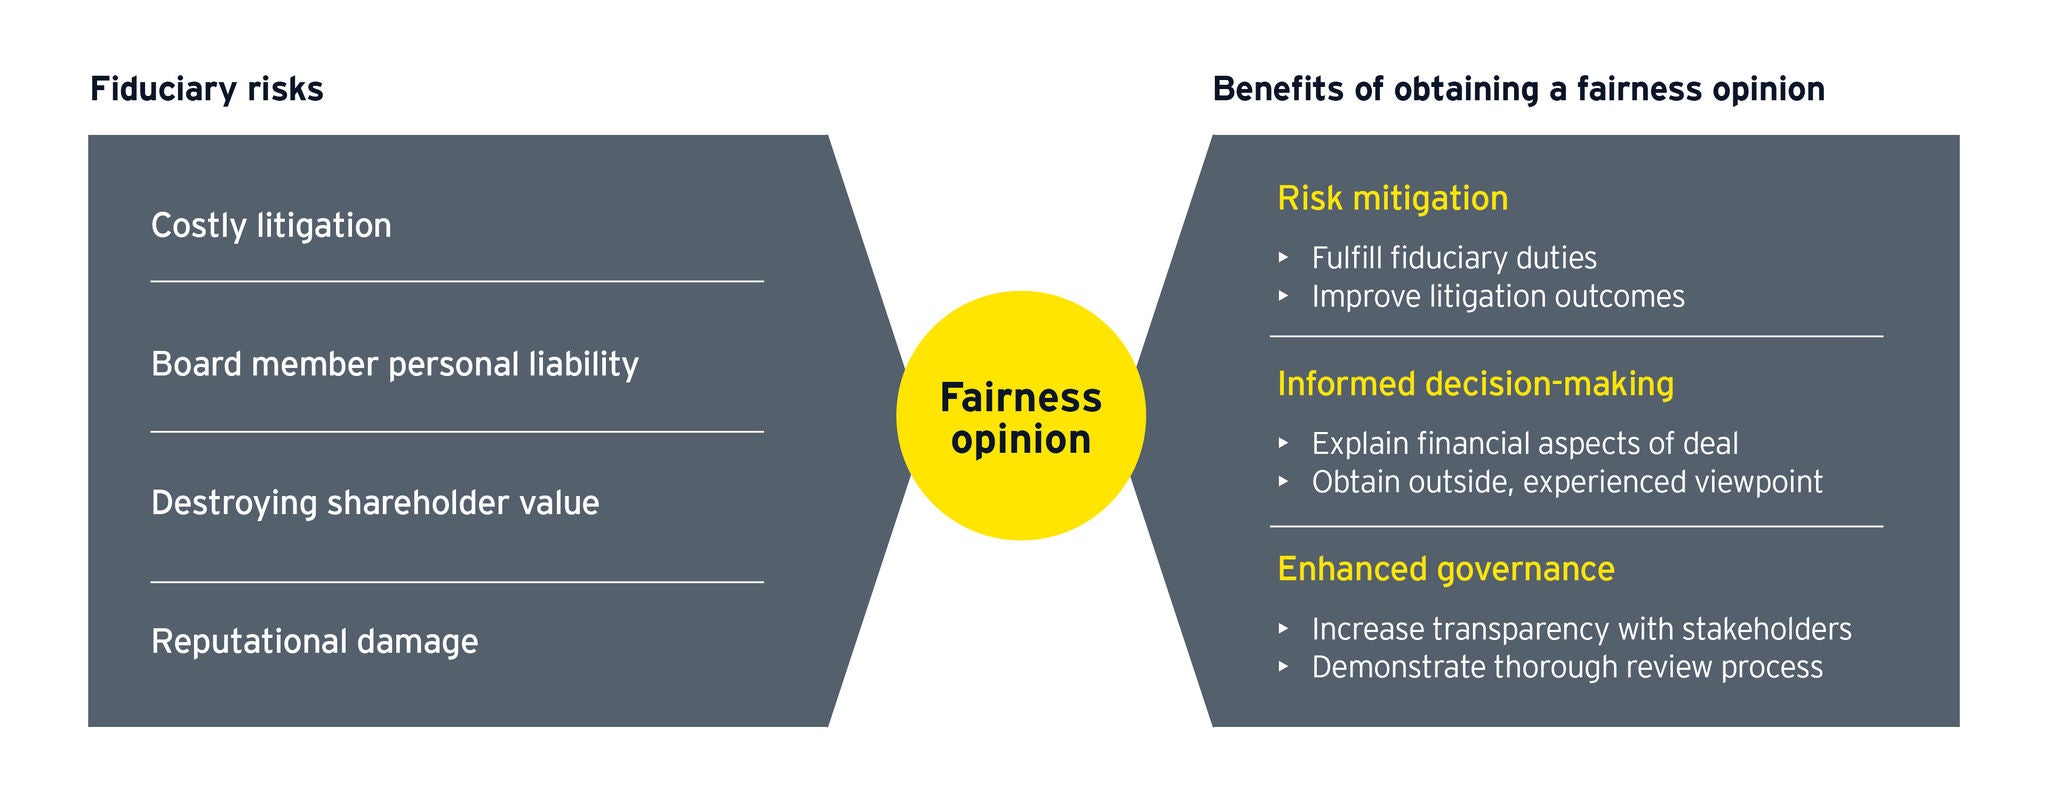 Benefits of obtaining fairness opinion